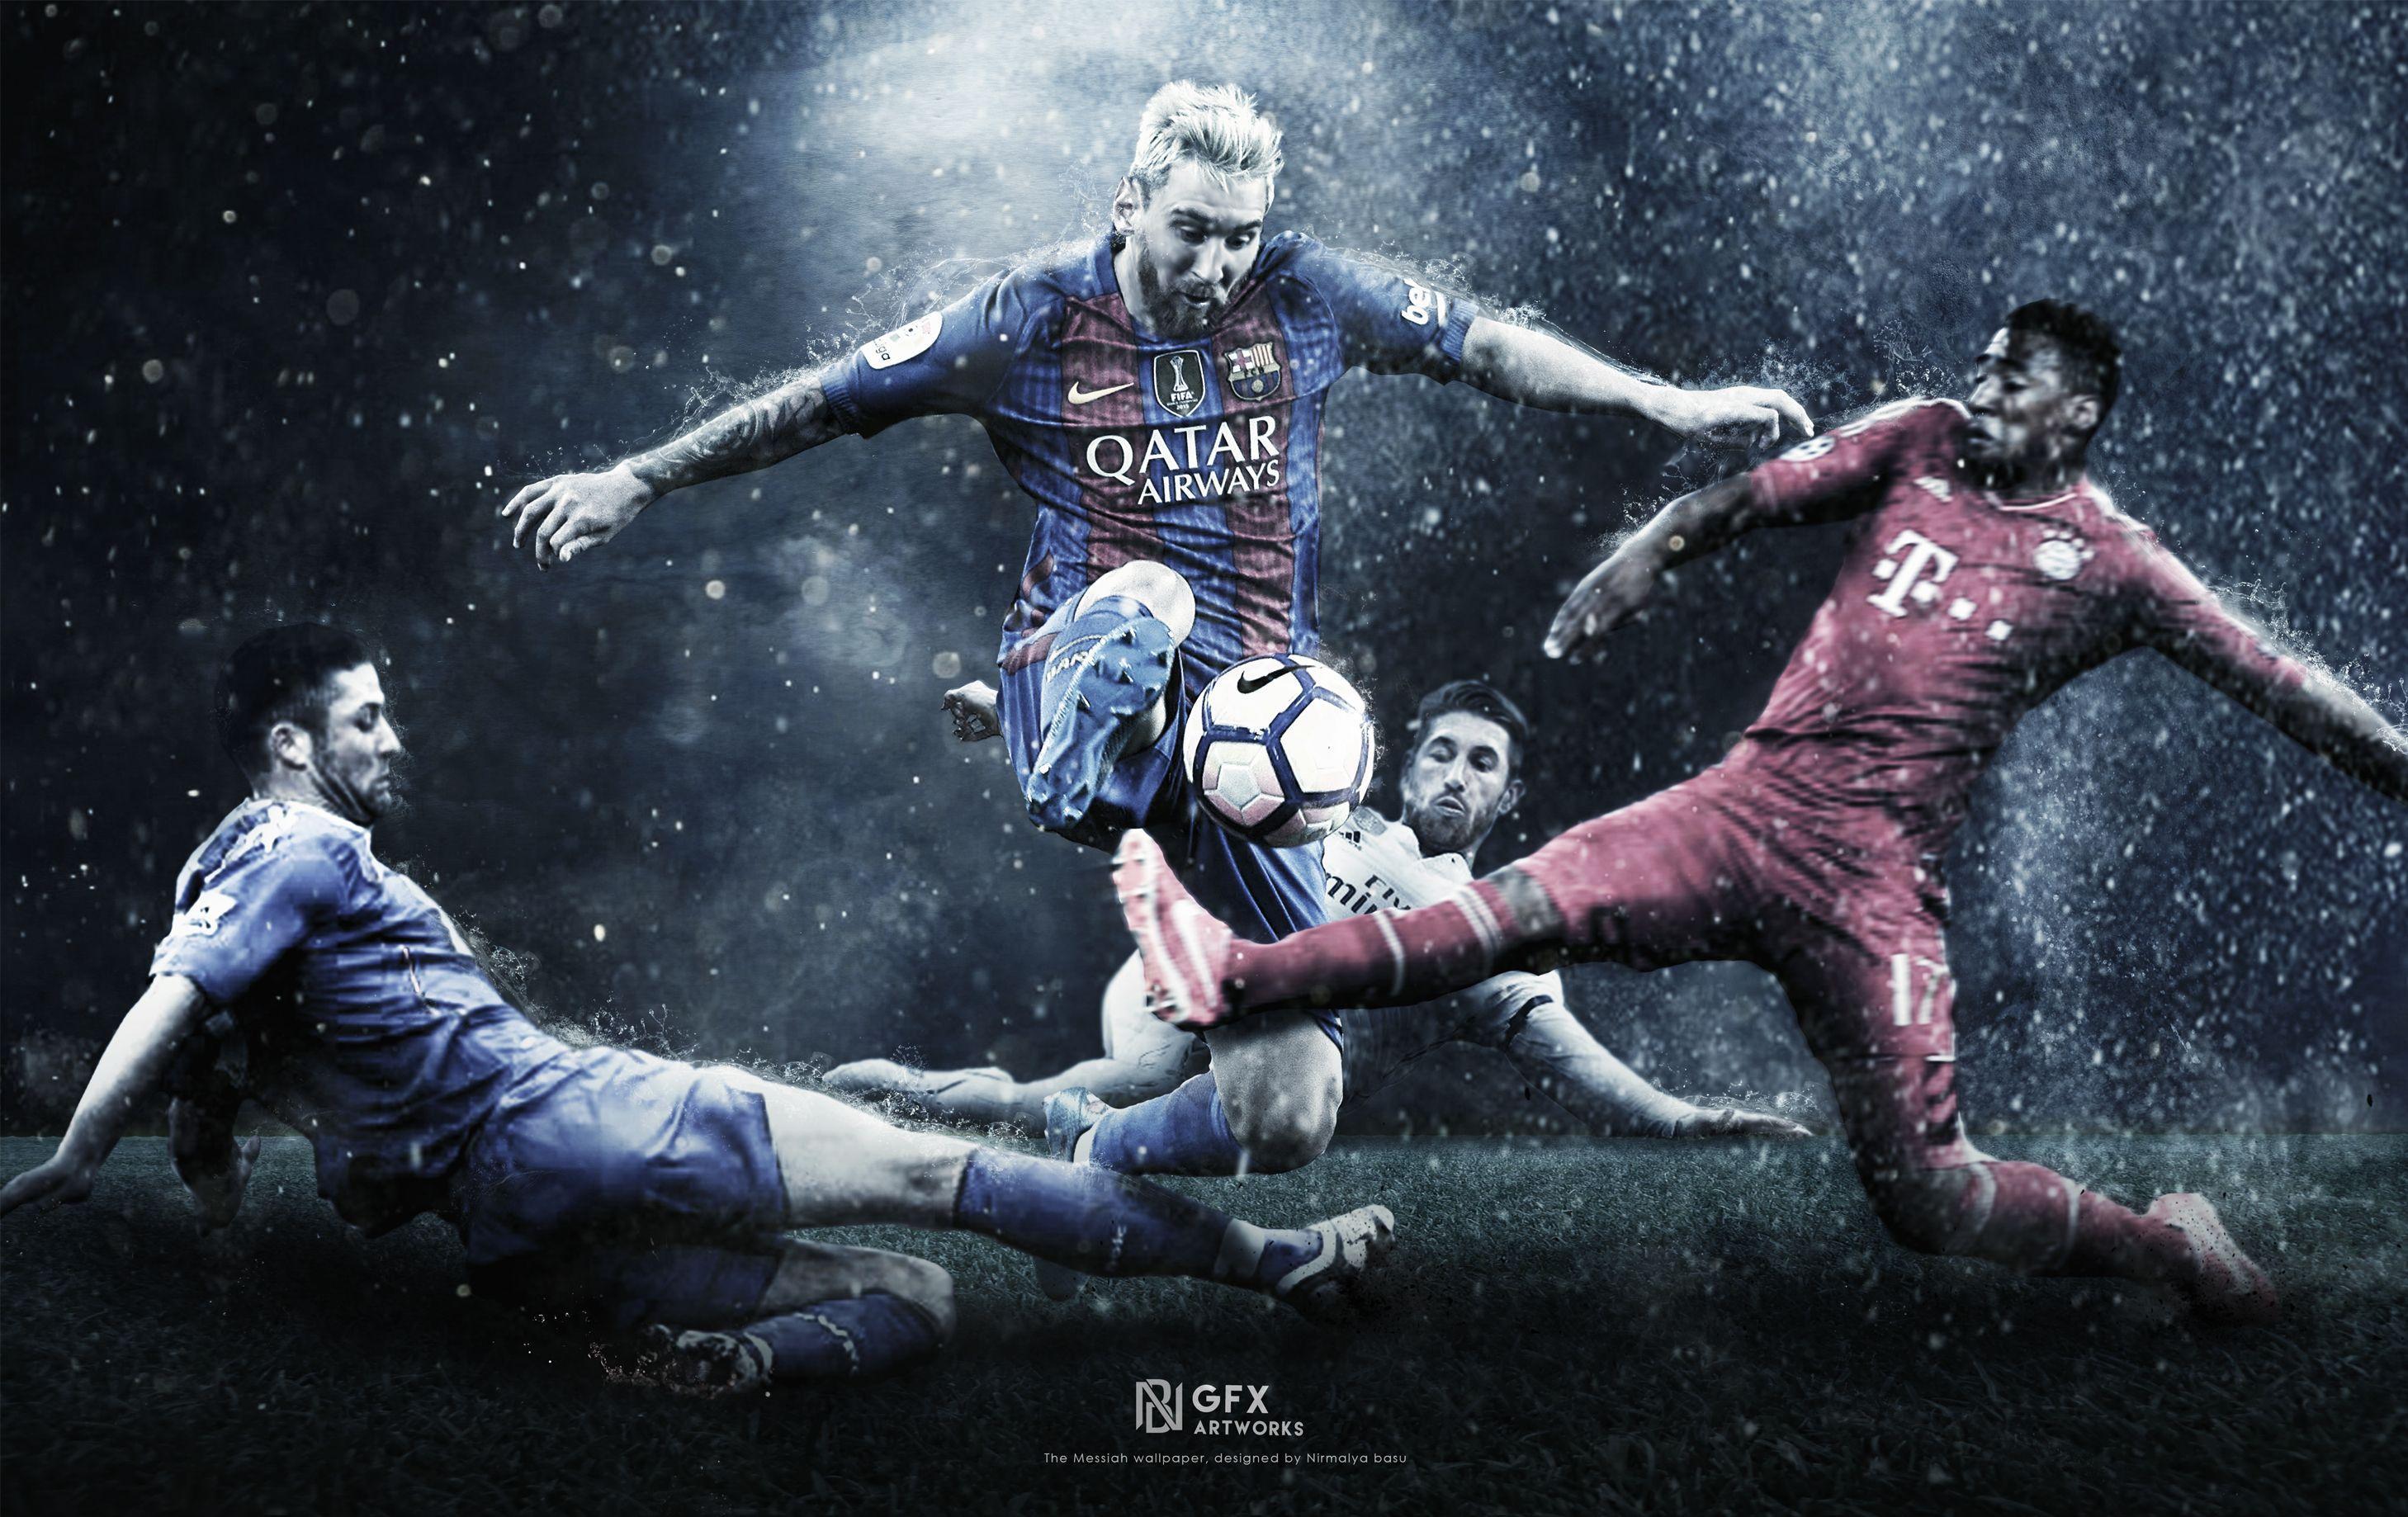 Lionel Messi HD Image